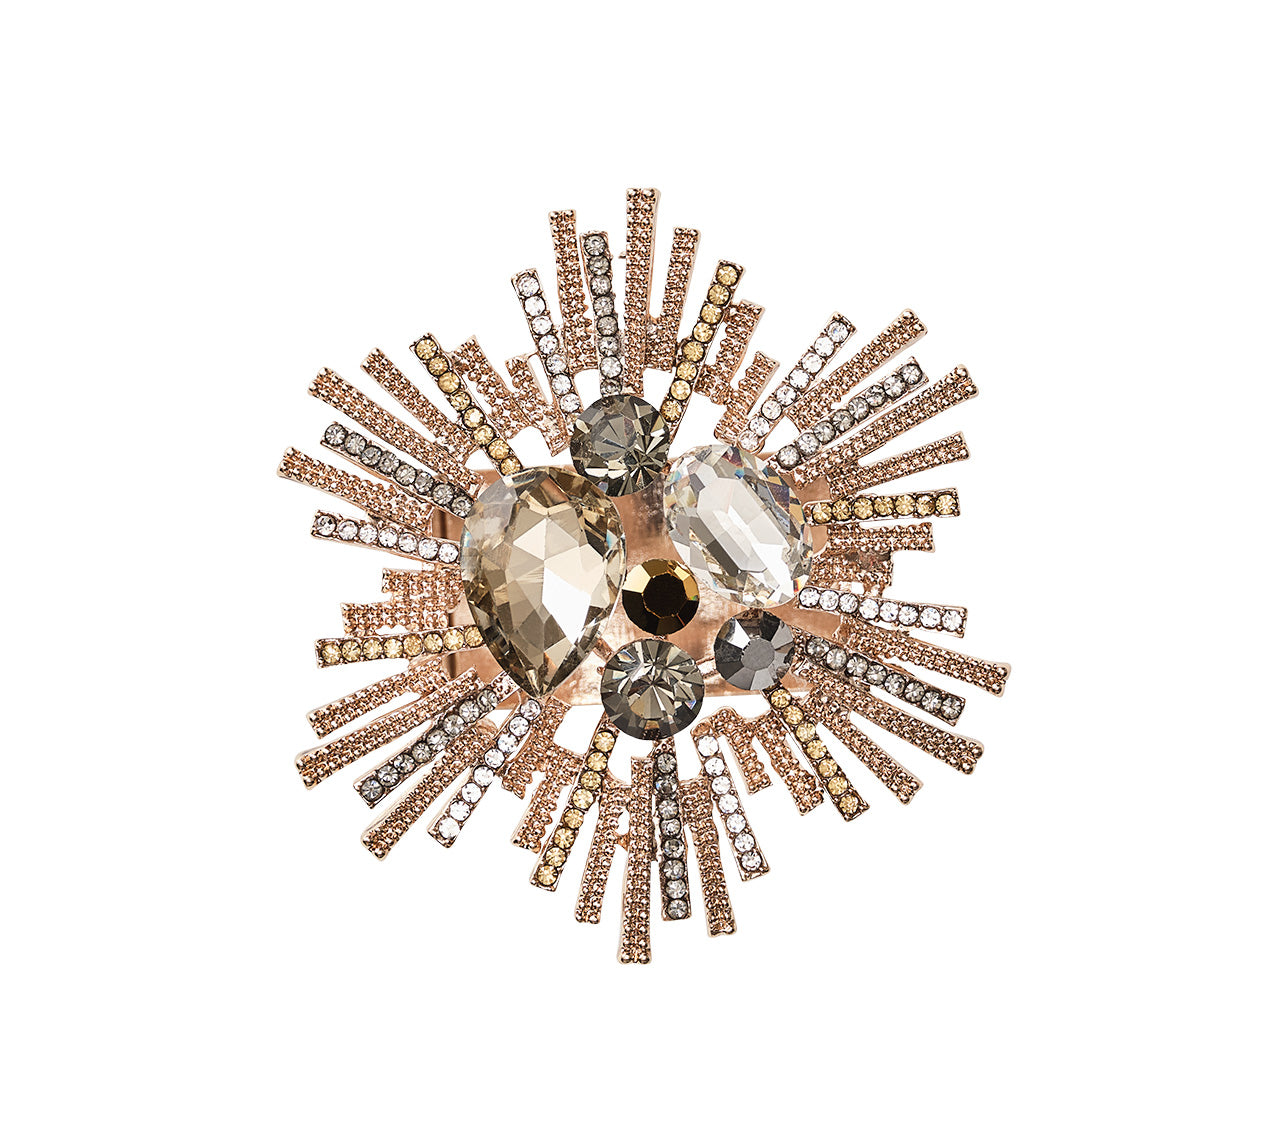 Kim Seybert Luxury Bijoux Napkin Ring in Champagne & Crystal in a Gift Box